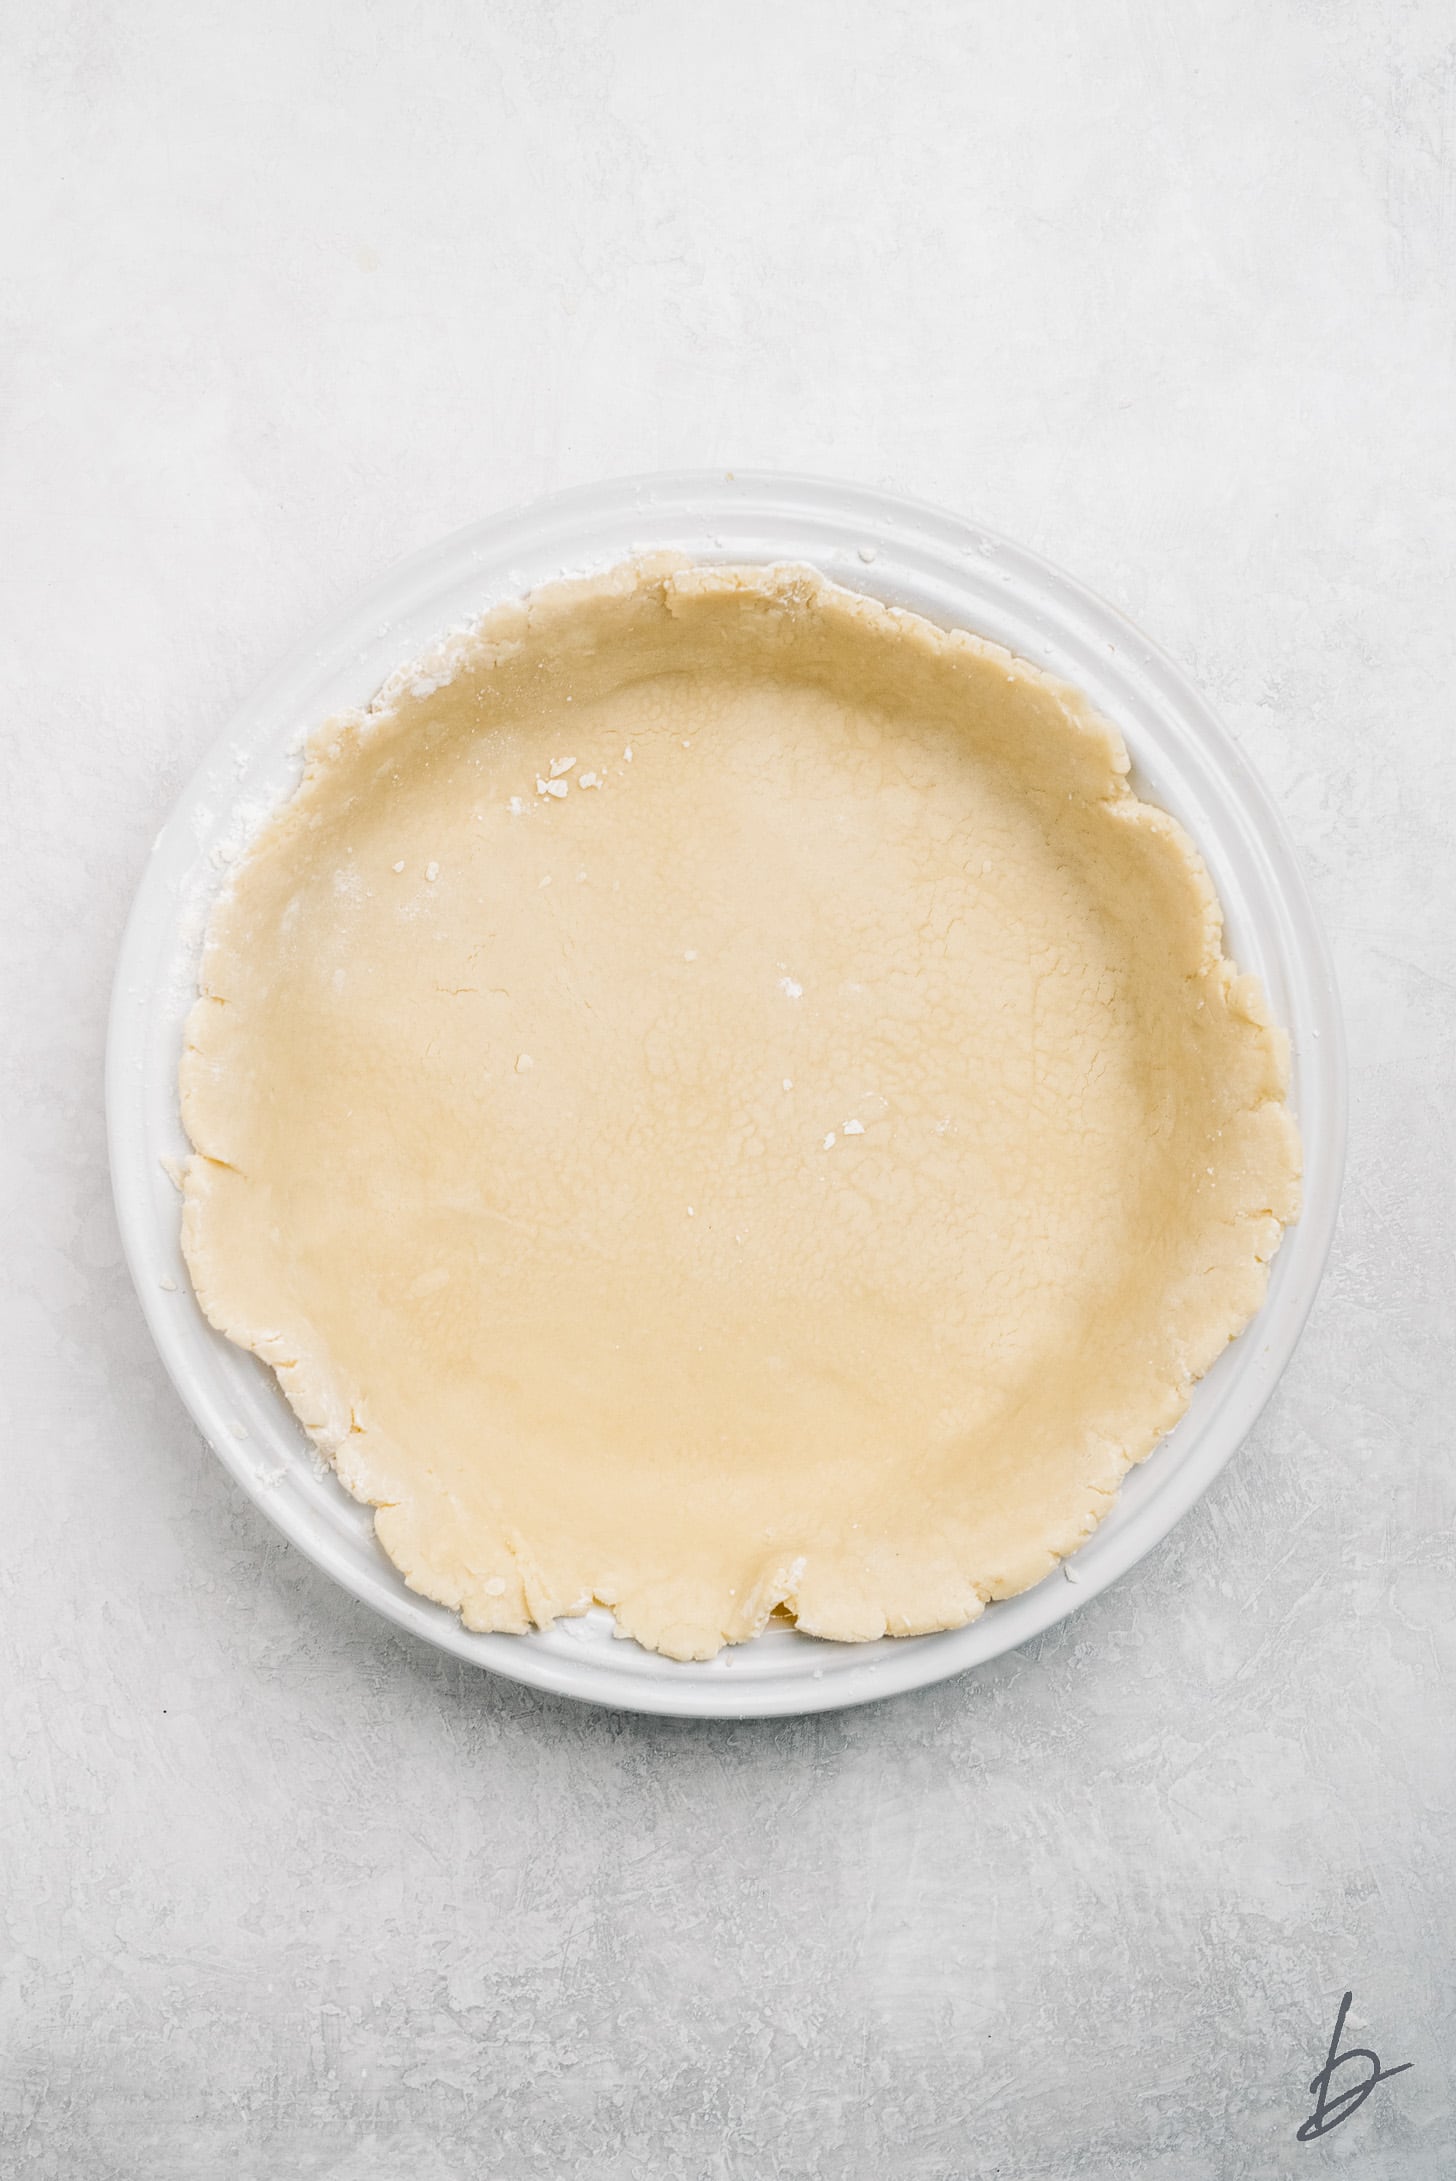 homemade pie crust in a white pie dish.